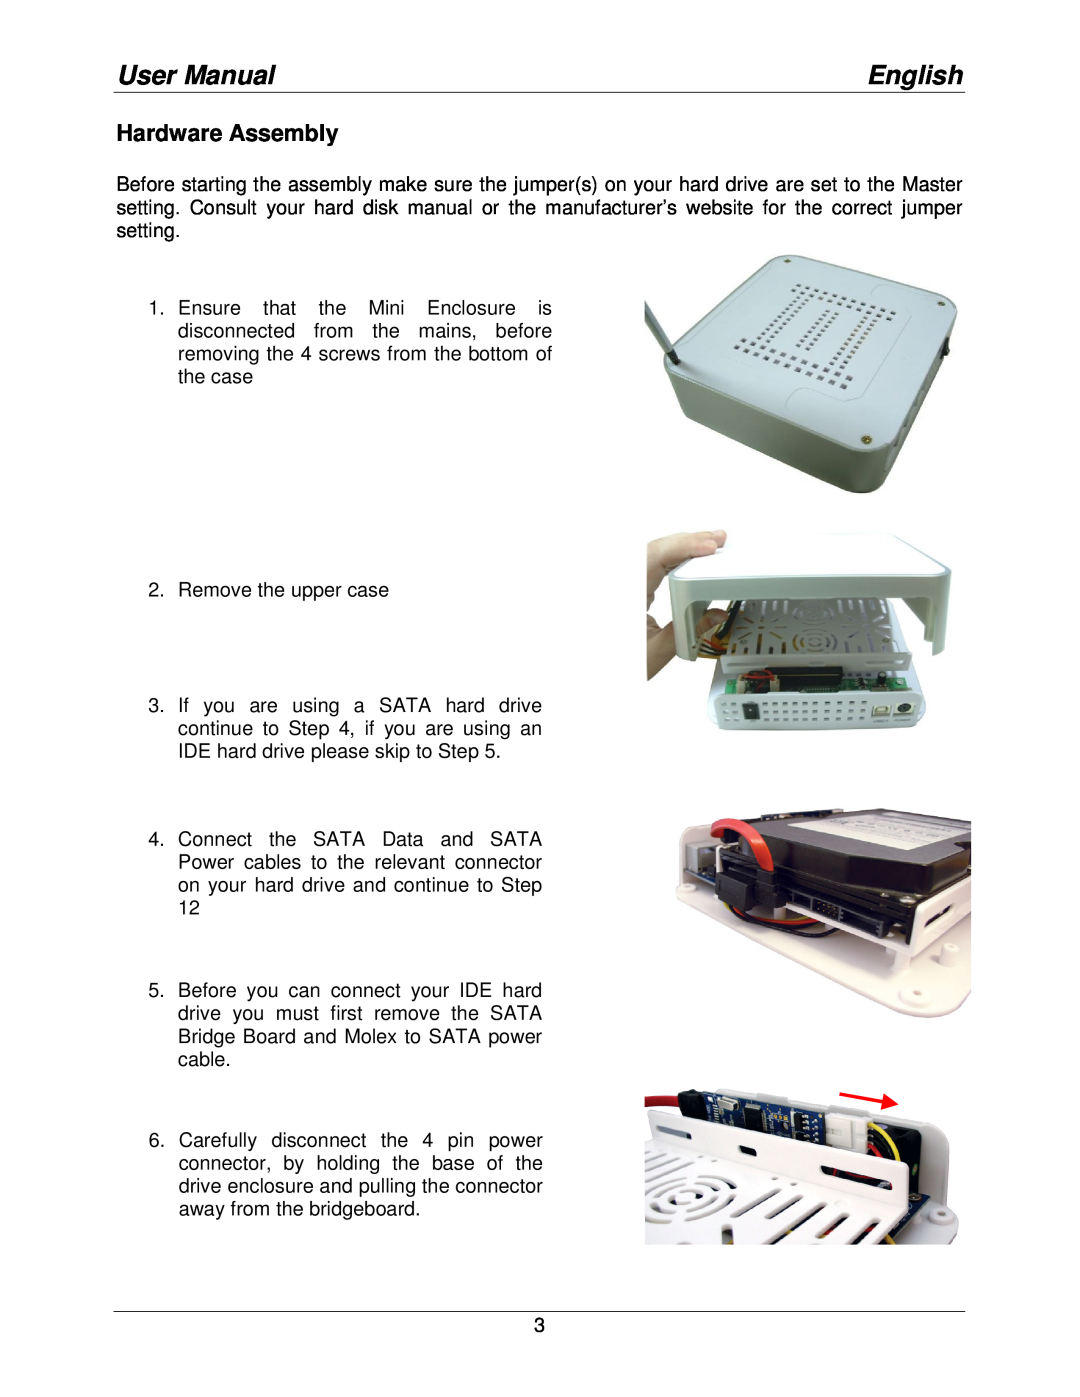 Lindy 42807v0 user manual Hardware Assembly, User Manual, English 